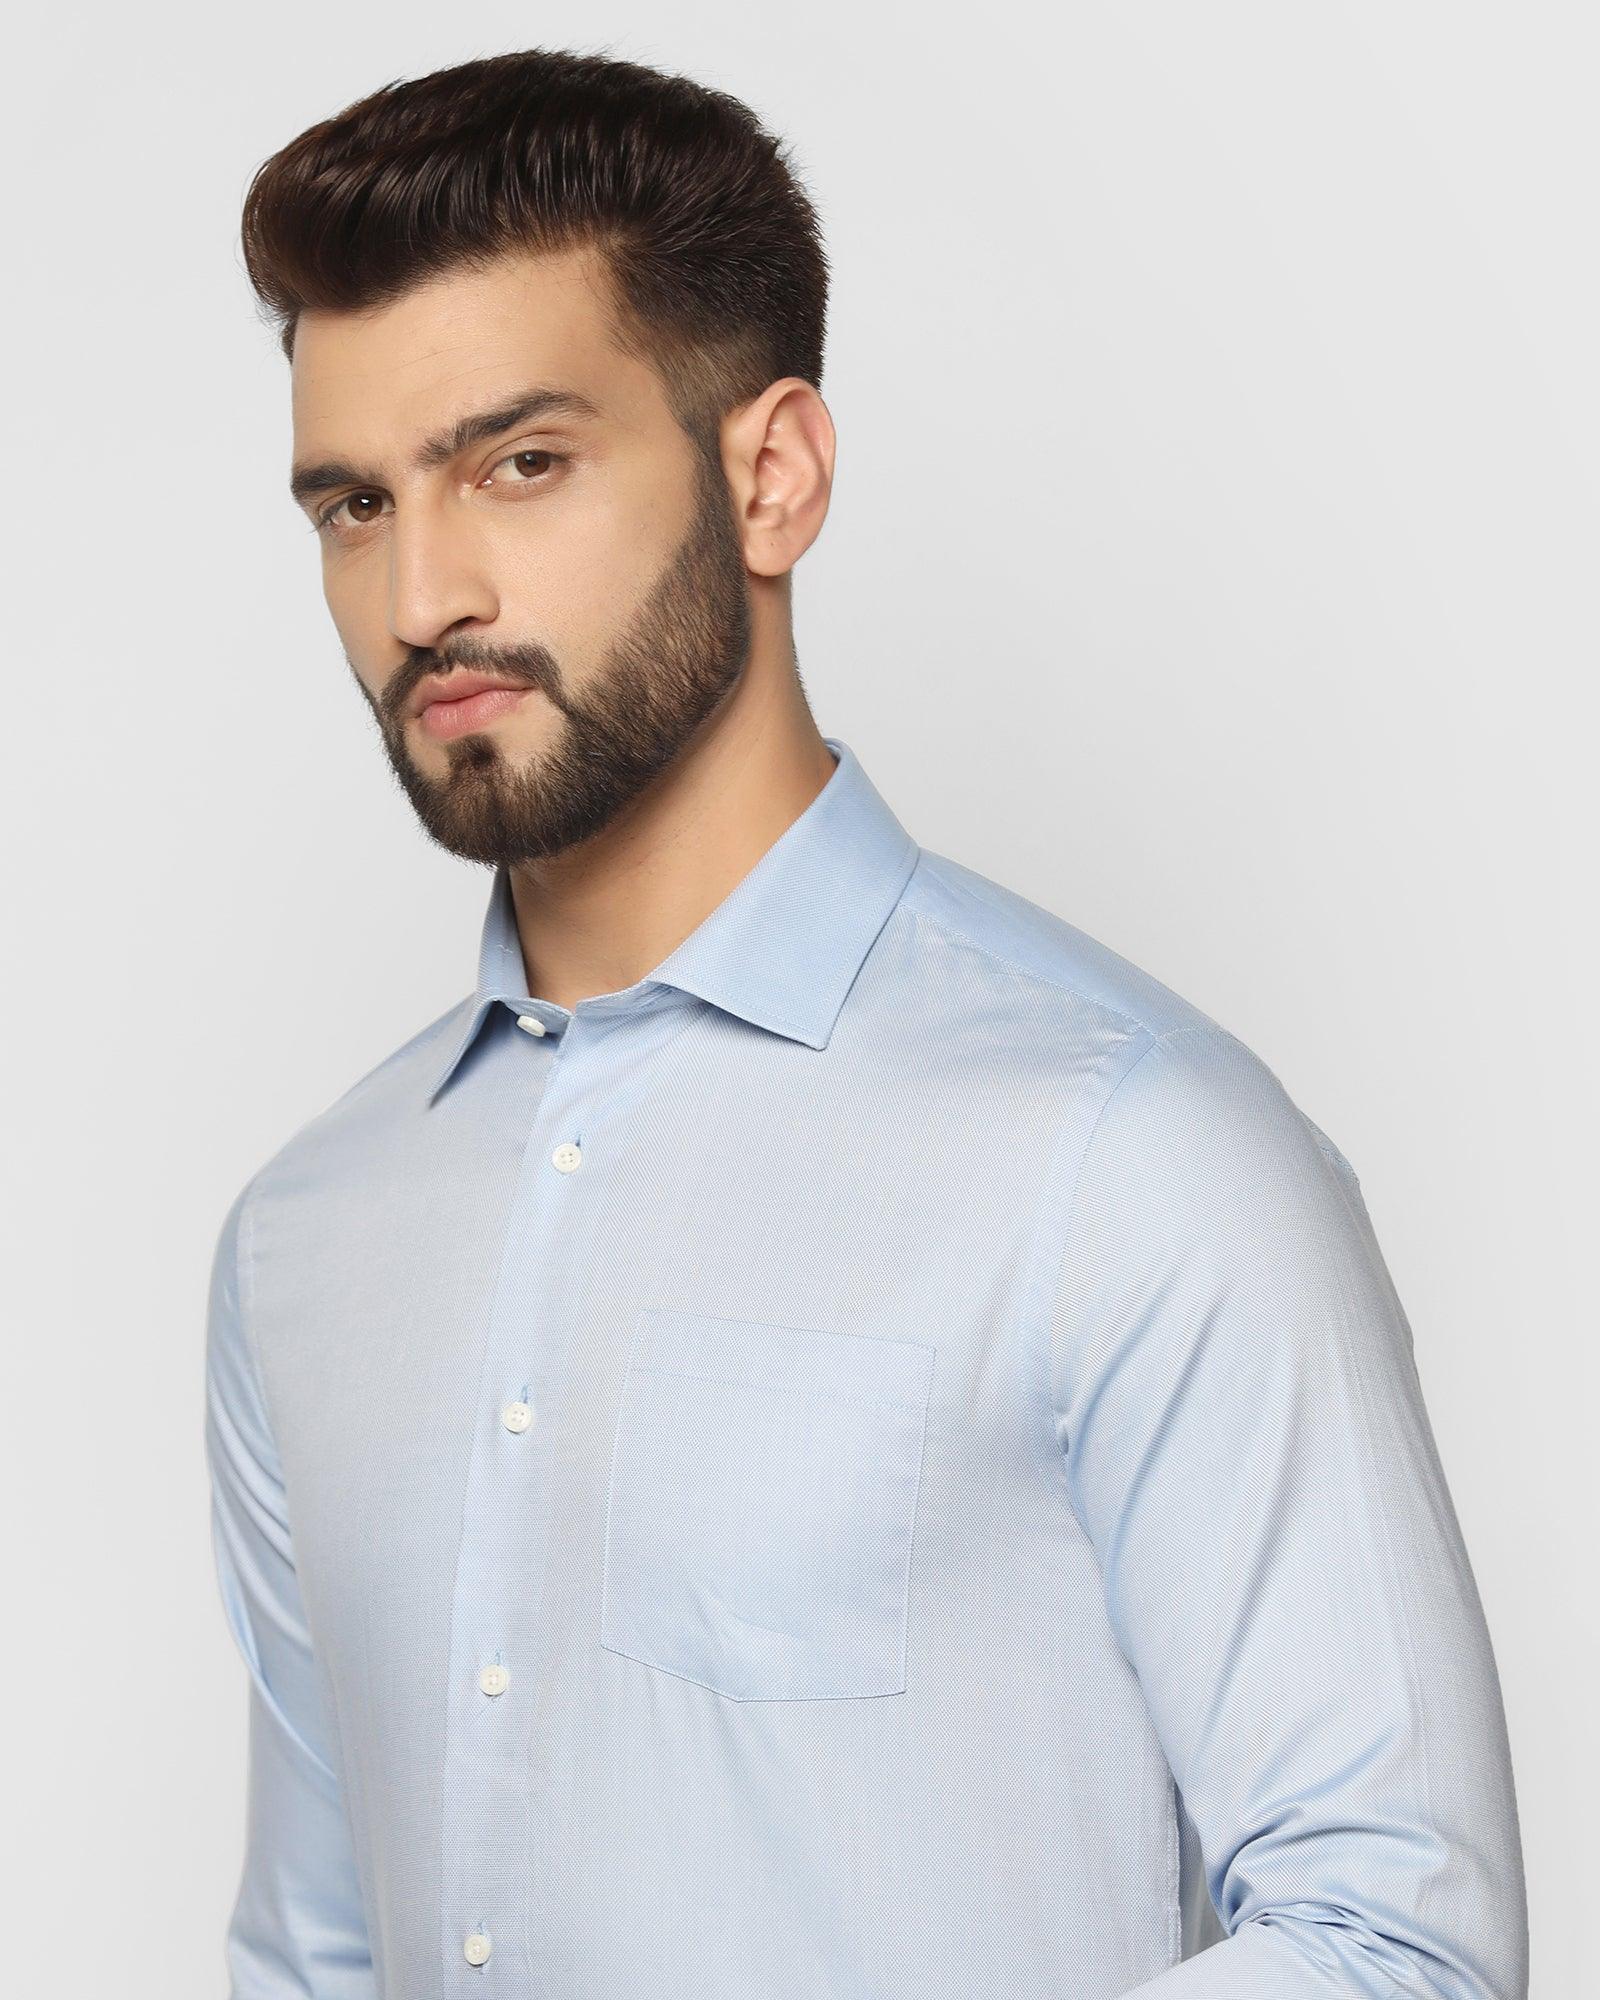 Formal Blue Textured Shirt - Bring